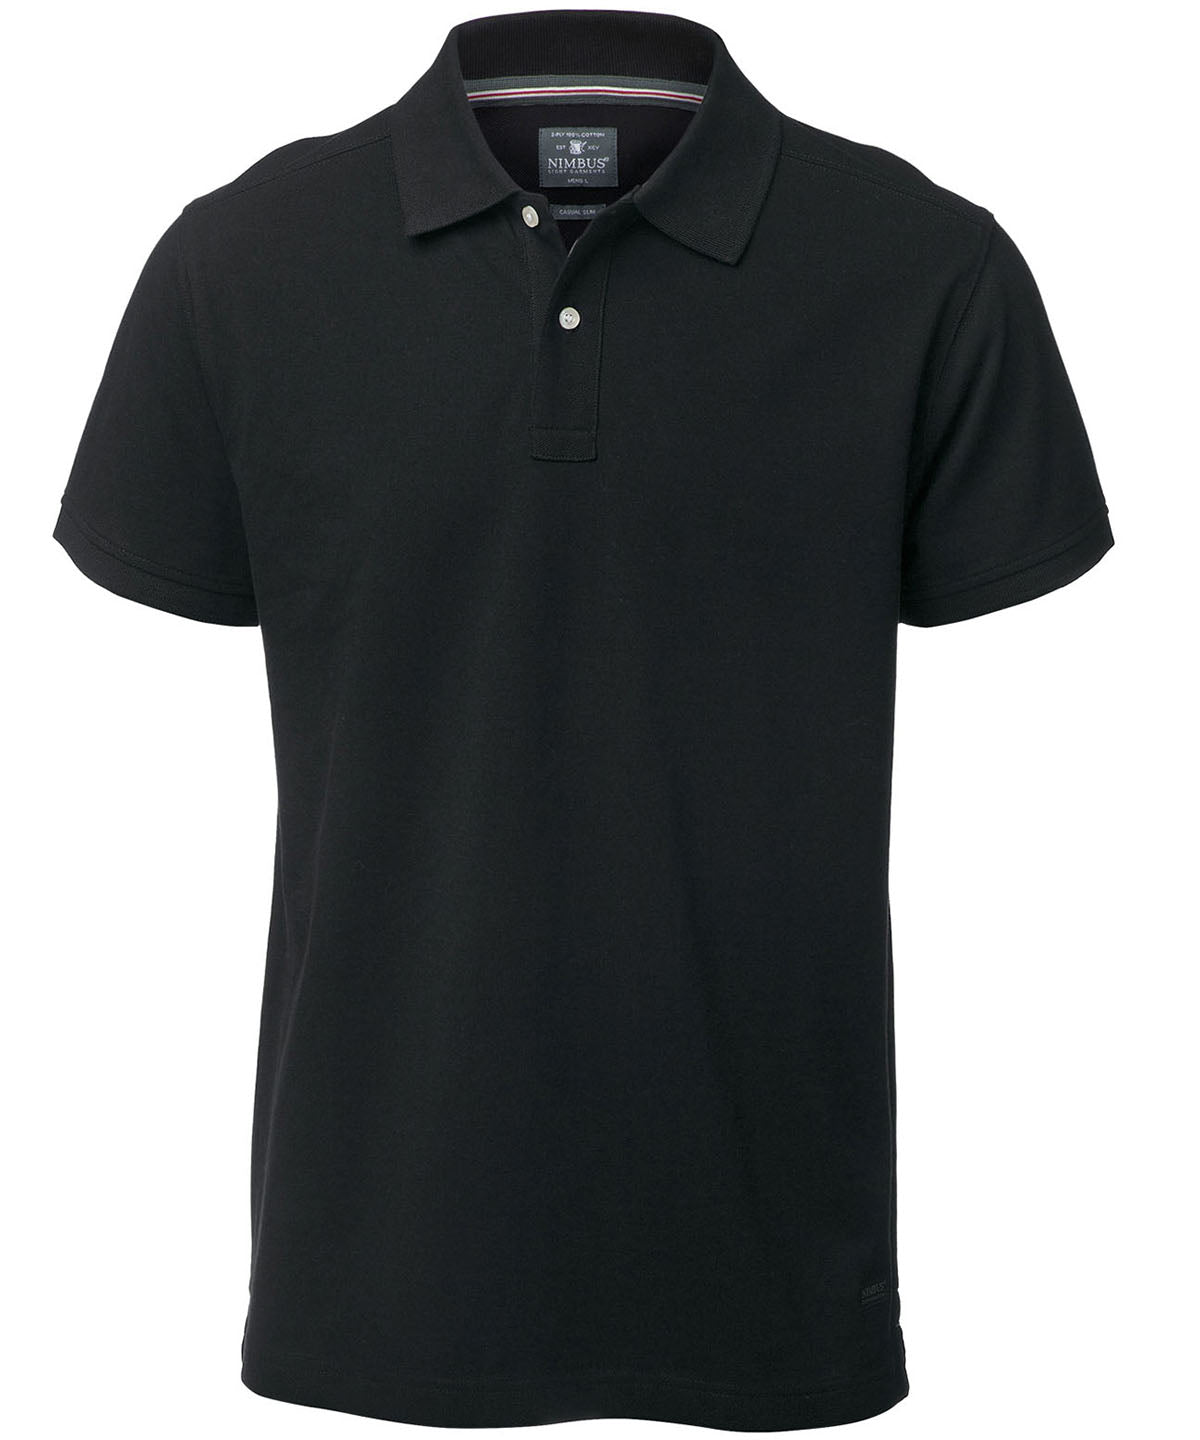 Personalised Polo Shirts - Black Nimbus Yale – the luxurious classic polo